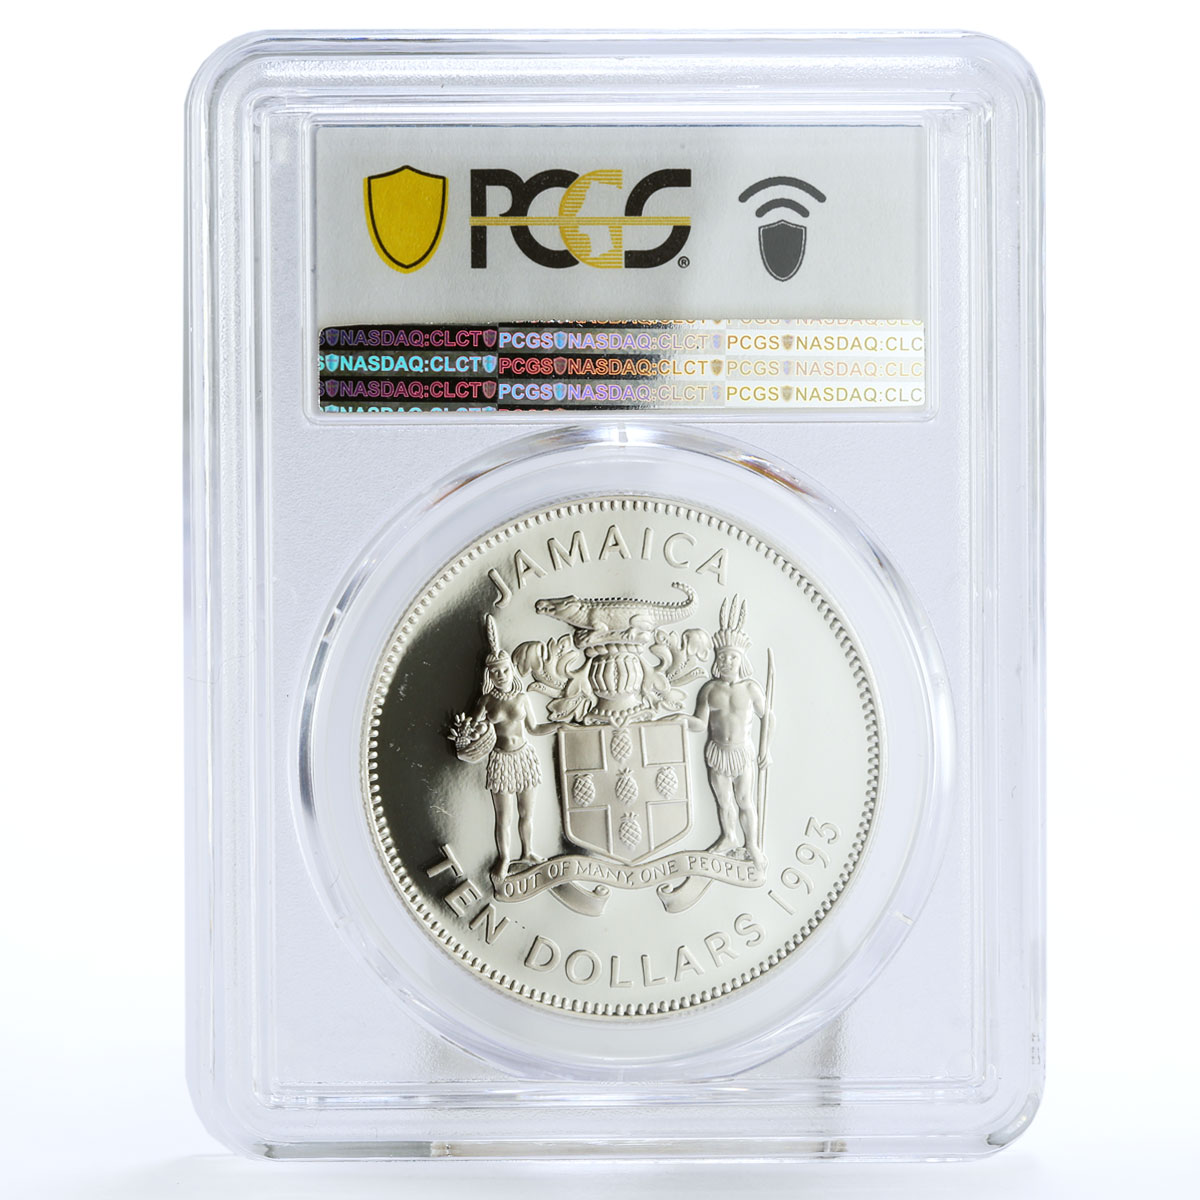 Jamaica 10 dollars Coronation Jubiliee Elizabeth II PR68 PCGS silver coin 1993